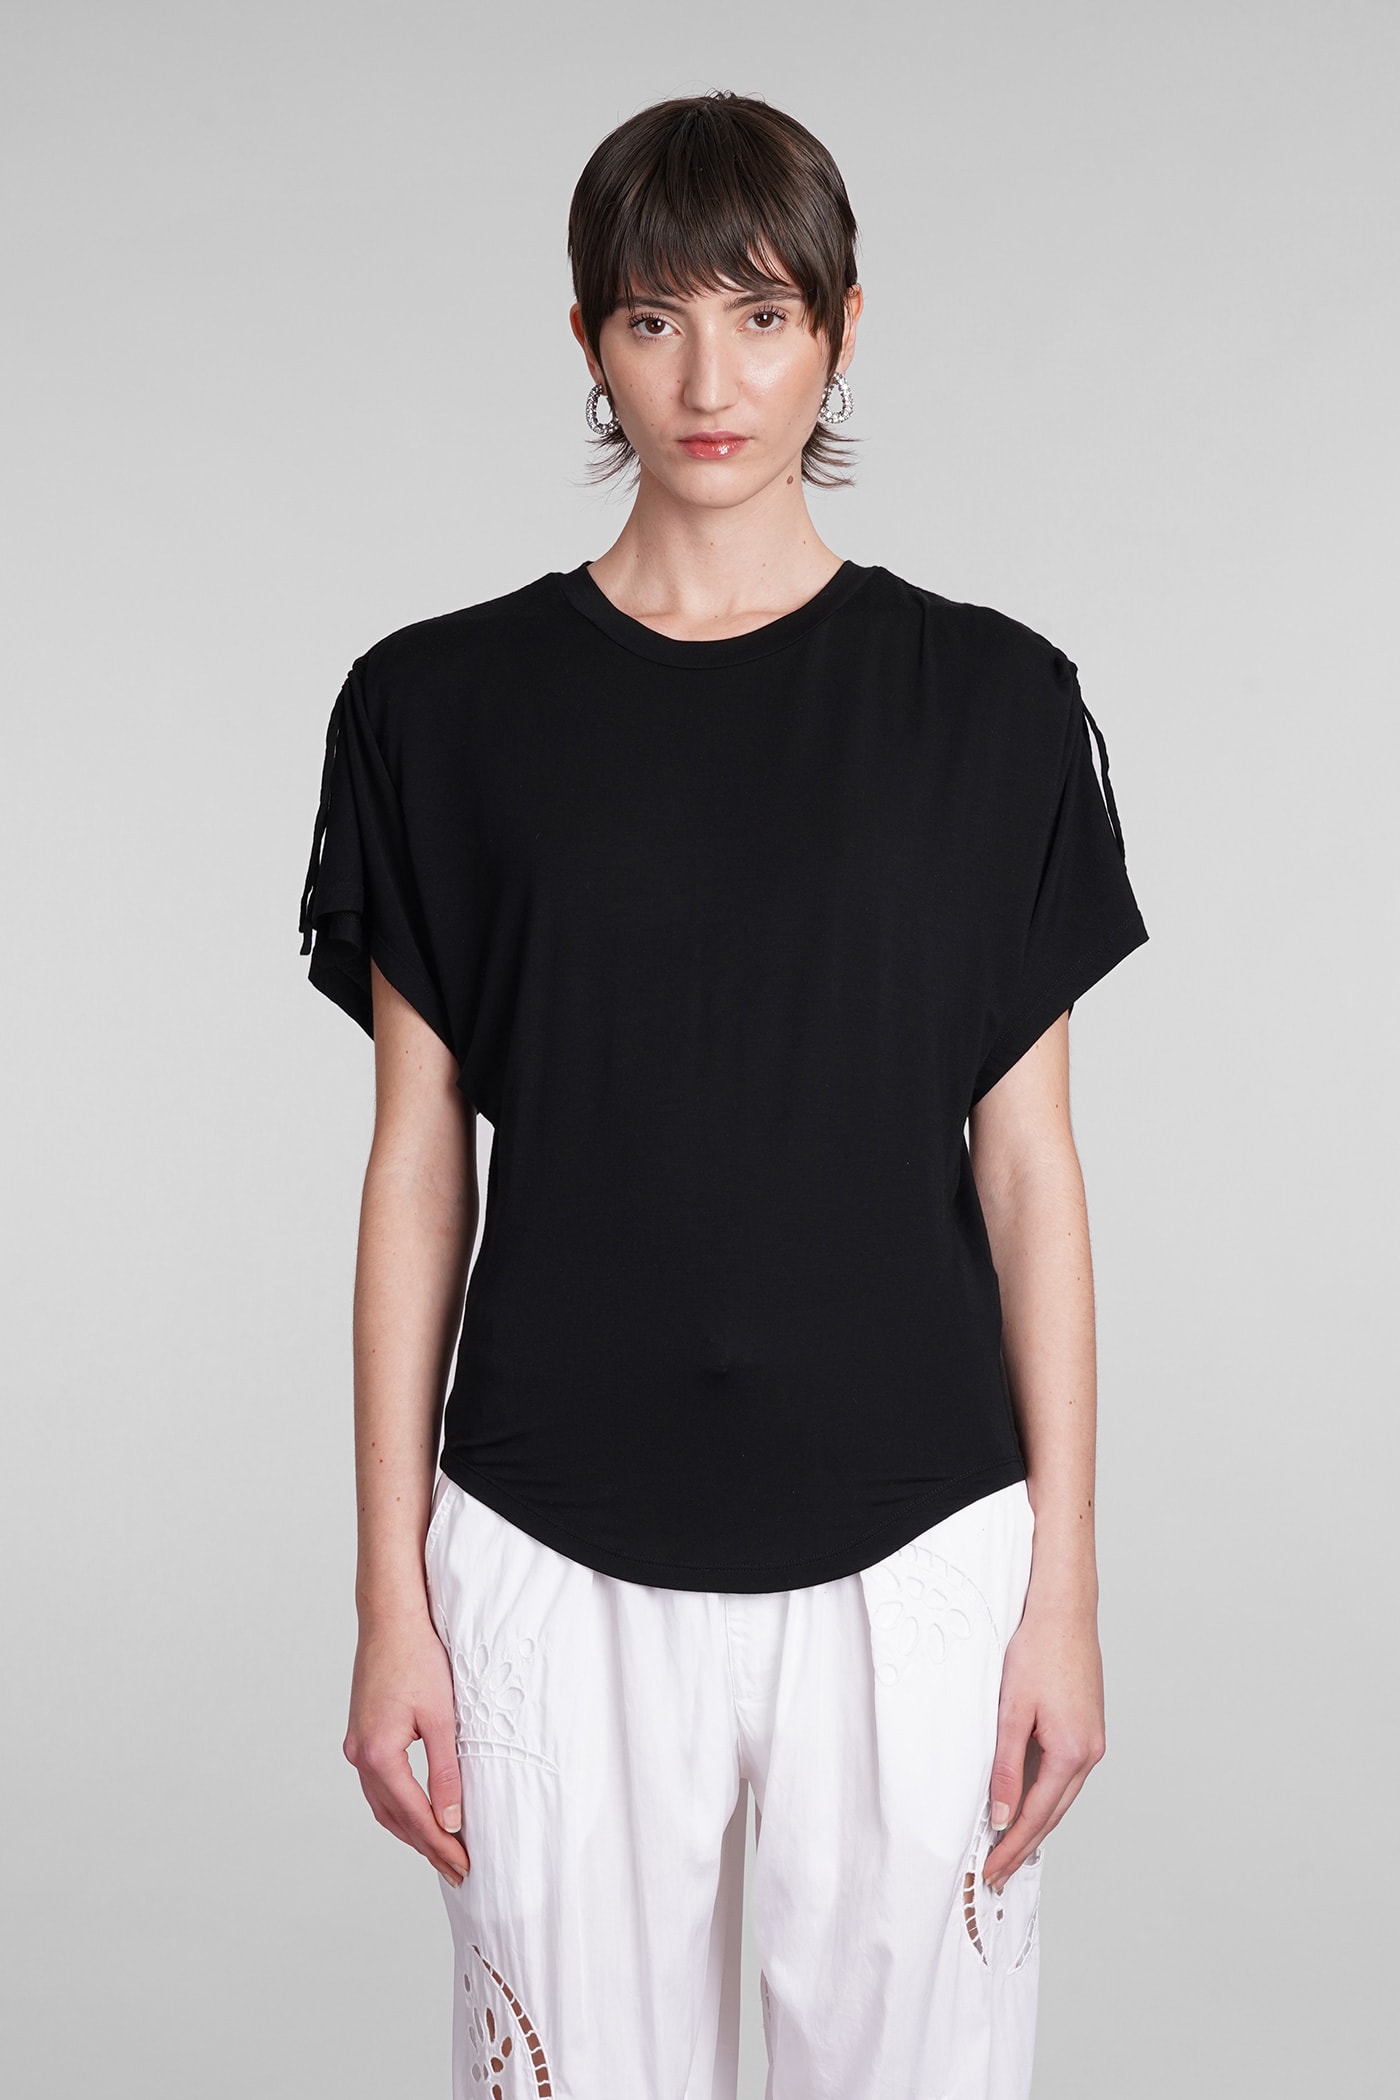 Zola T-shirt In Black Modal